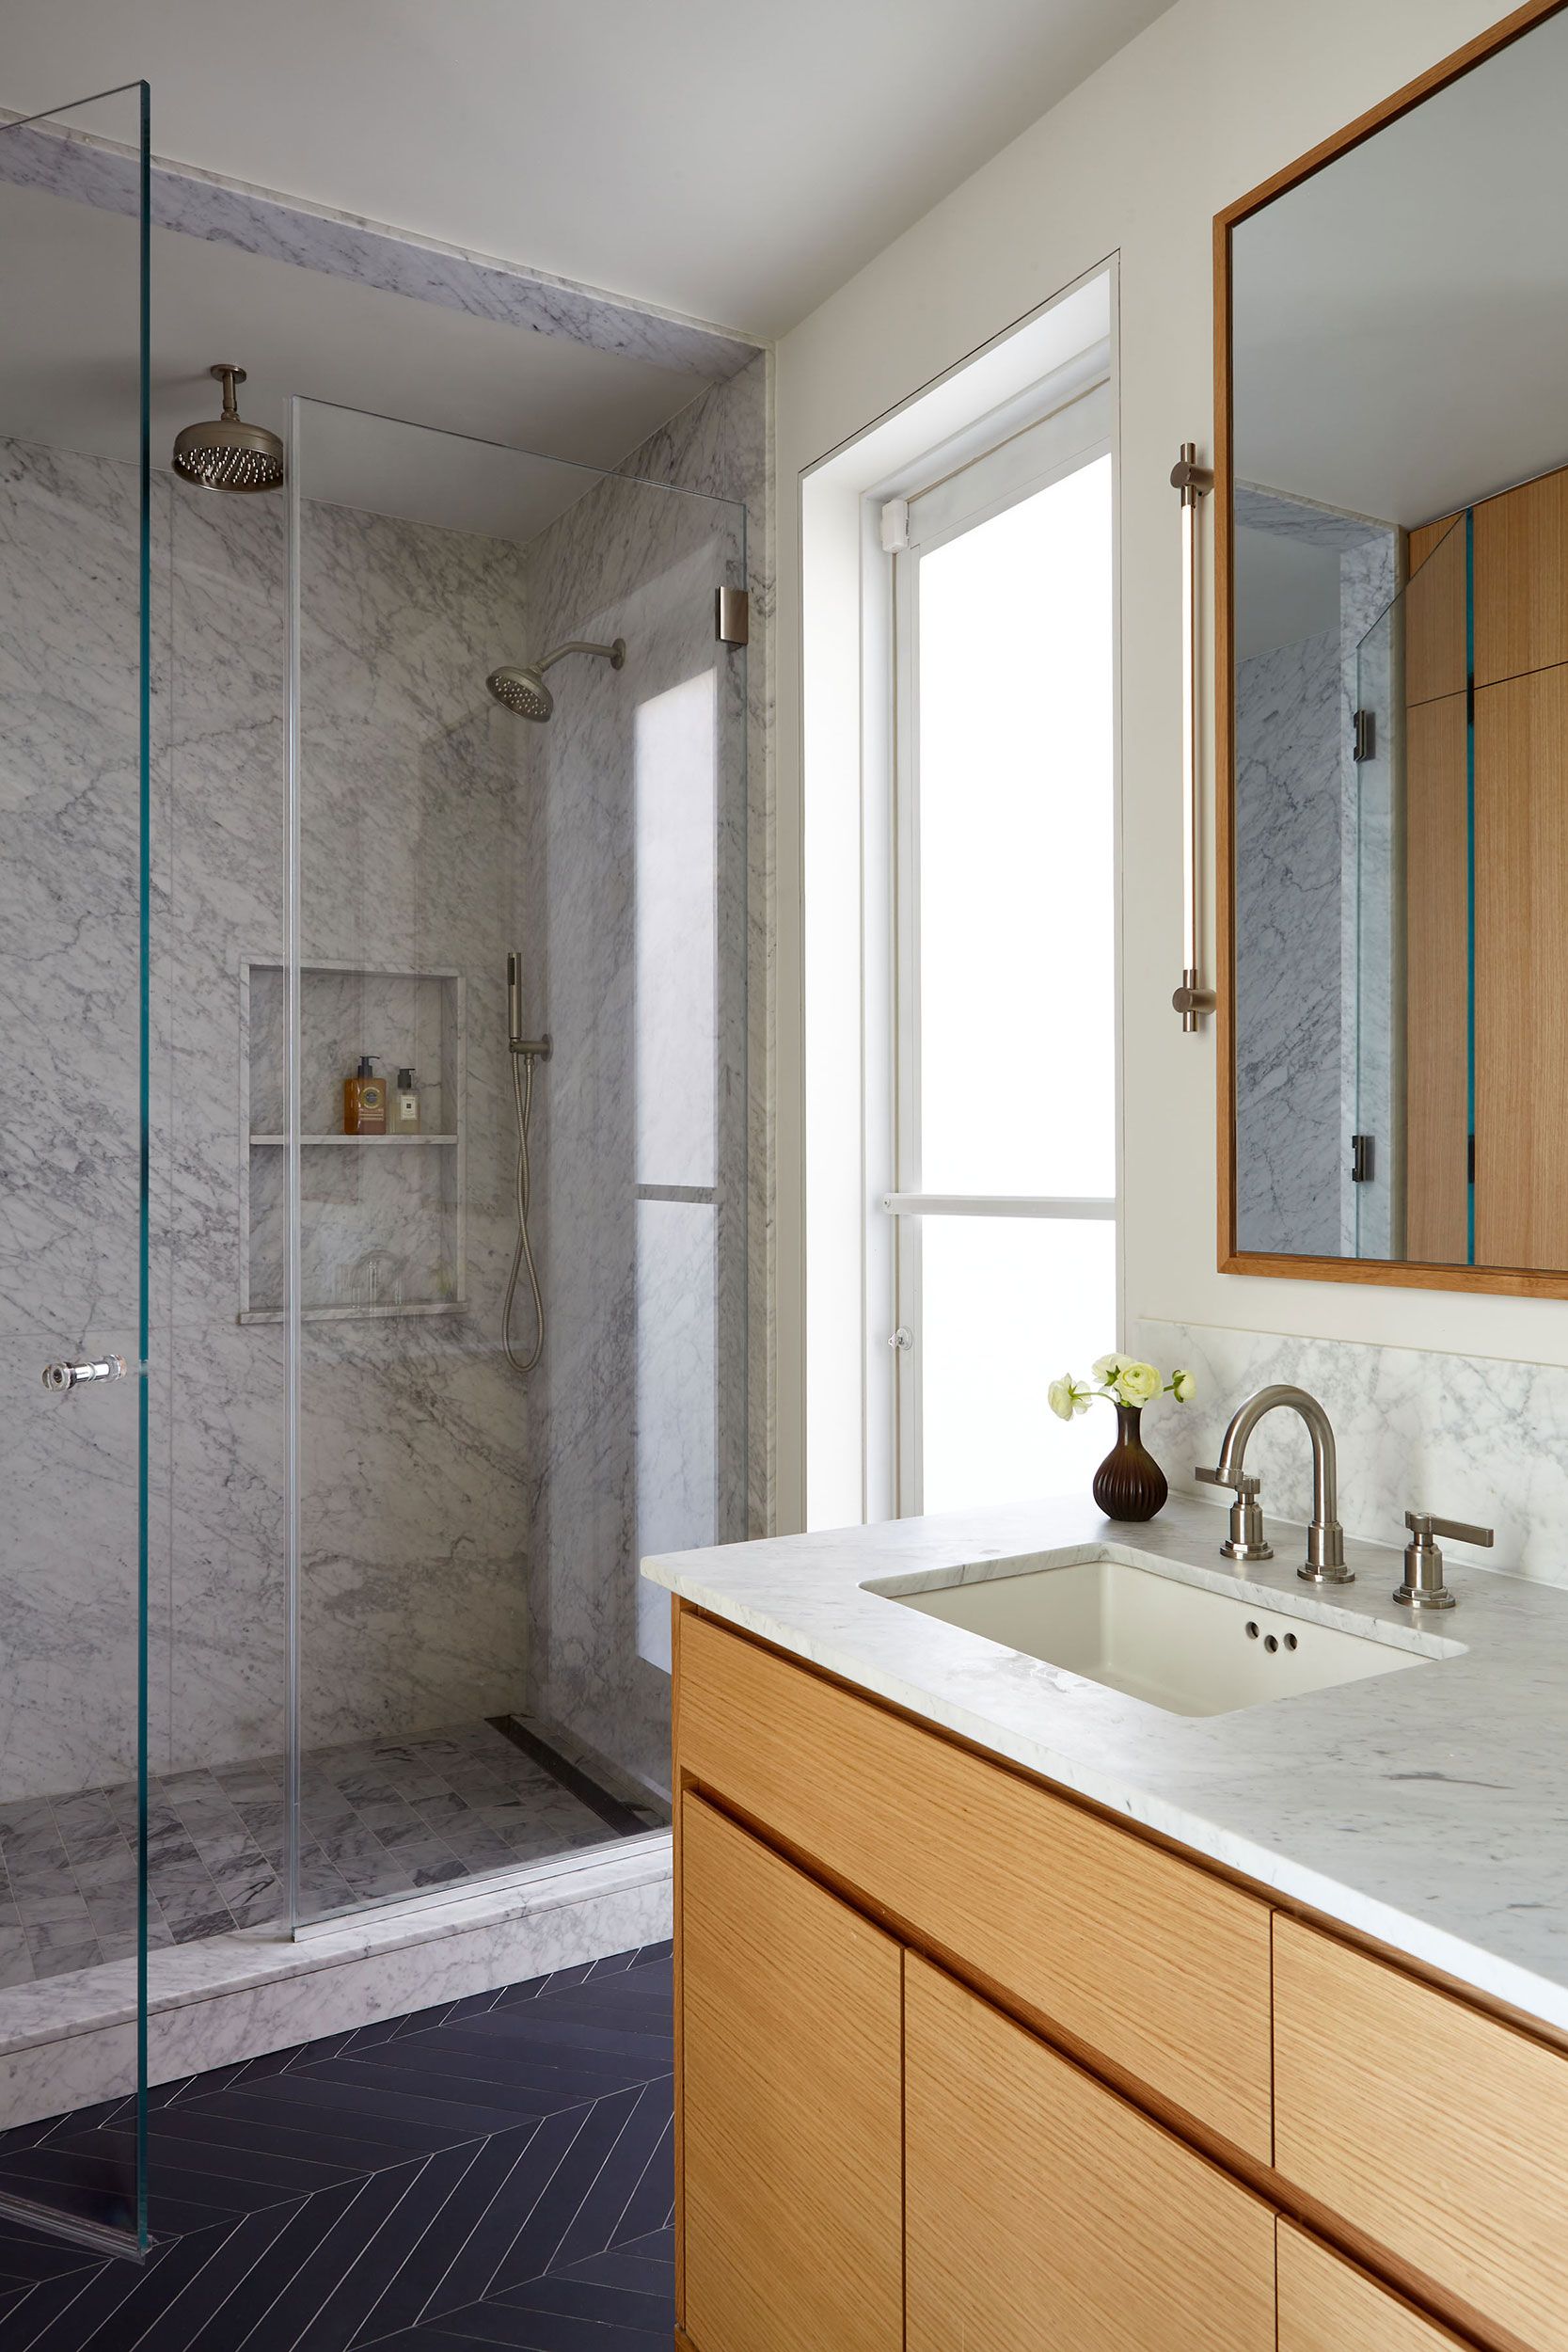 Six Modern Design Ideas For An Ideal Master Bathroom - LUXUO